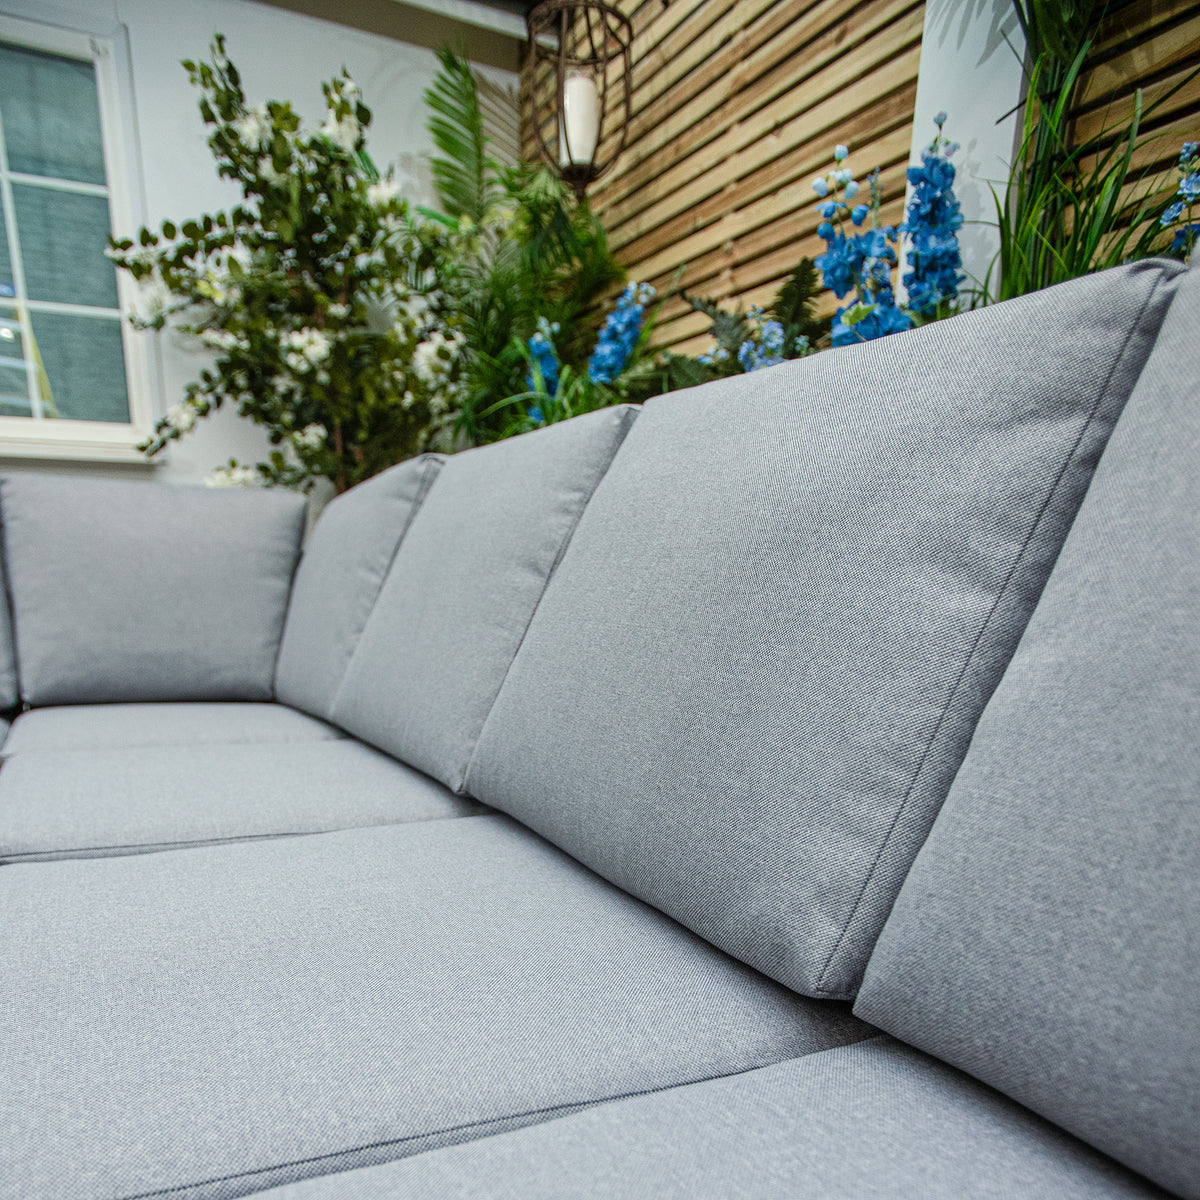 Bracken Outdoors Miami Dark Aluminium Compact Corner Set with Adjustable Table and Armchairs